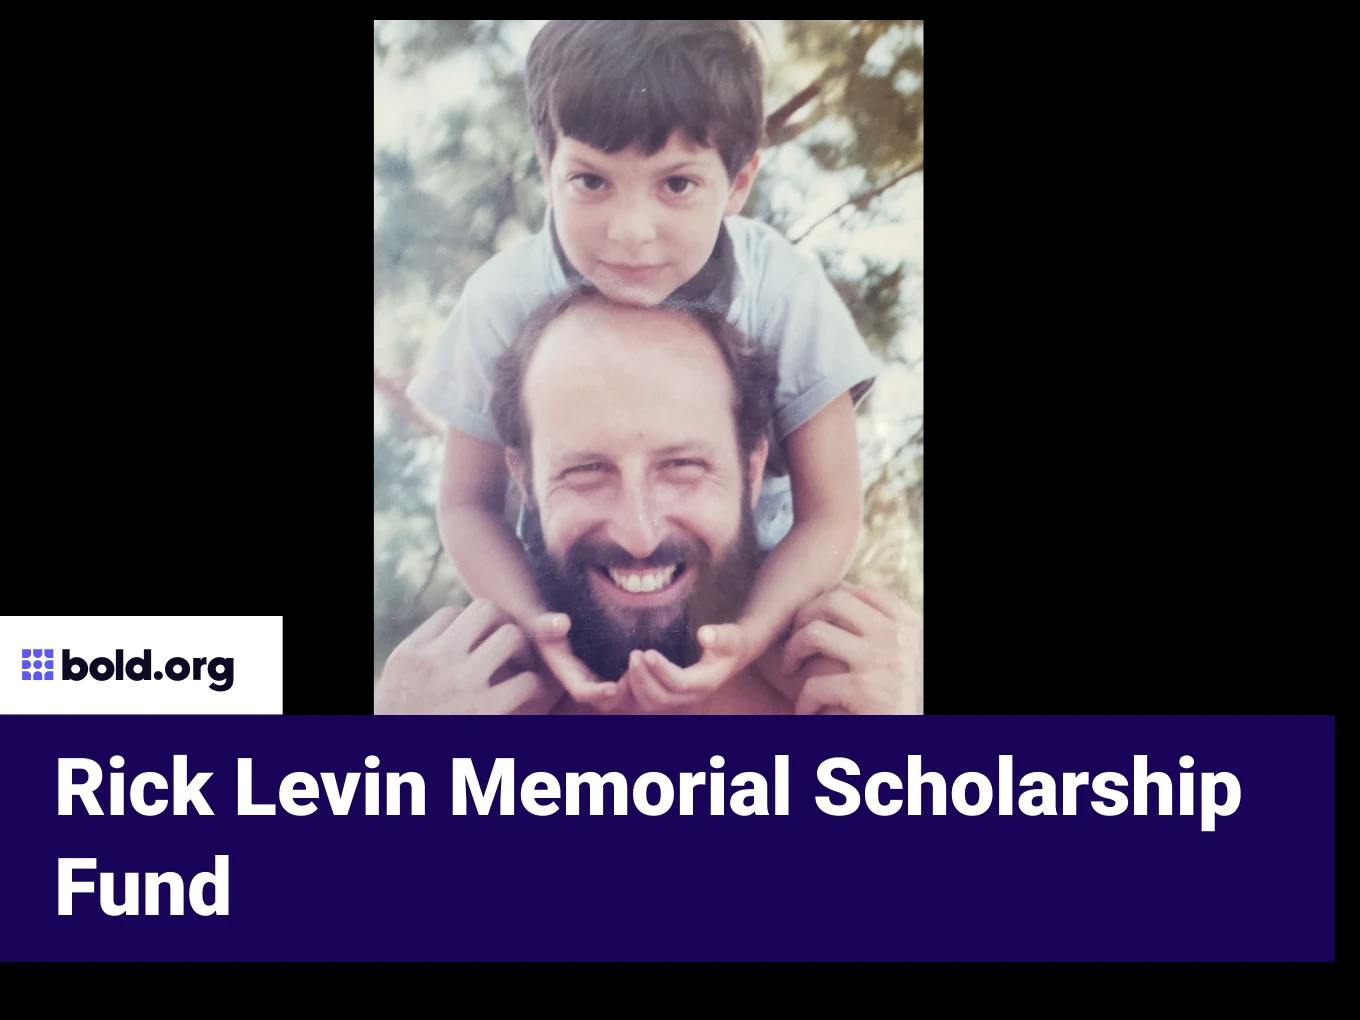 Rick Levin Memorial Scholarship Fund